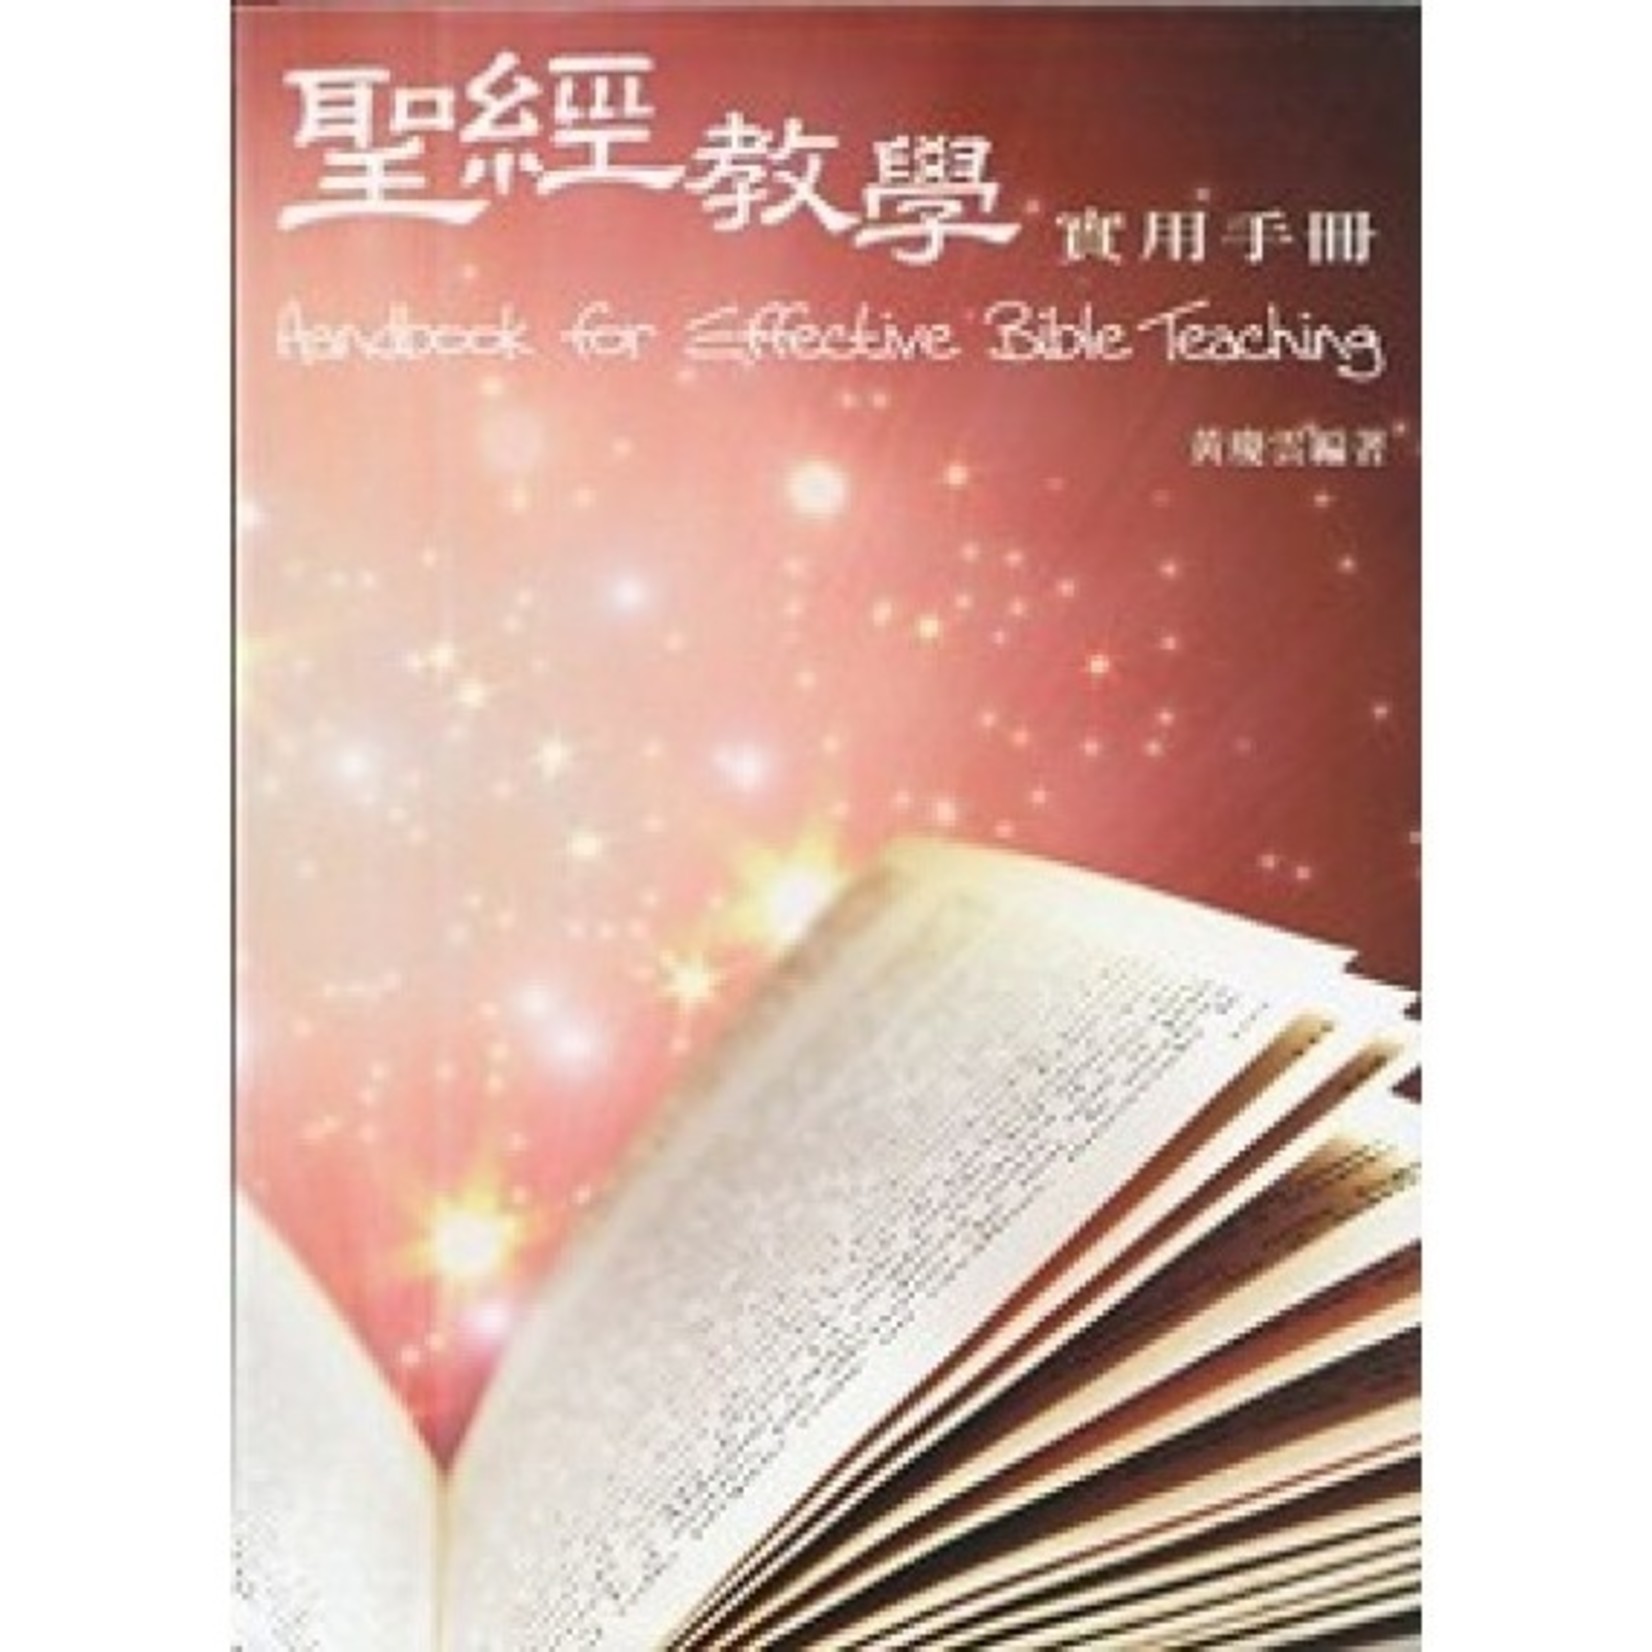 中國主日學協會 China Sunday School Association 聖經教學實用手冊 HANDBOOK FOR EFFECTIVE BIBLE TEACHING